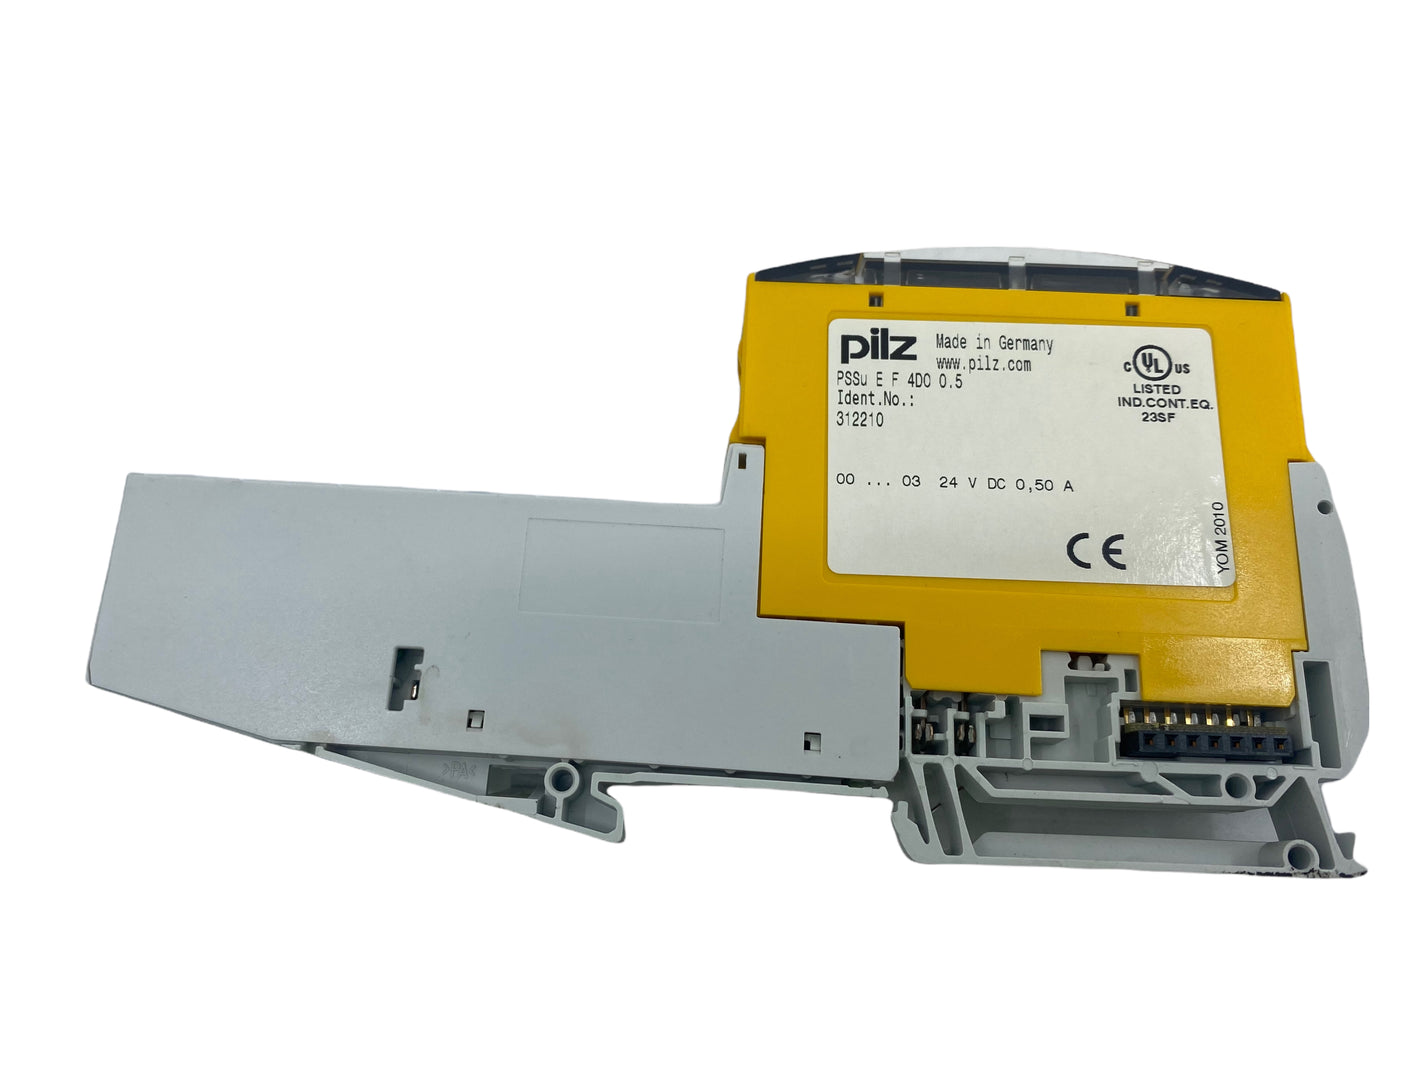 Pilz PSSuEF4D00.5 312210 electronic module 24VDC 0.50 A 